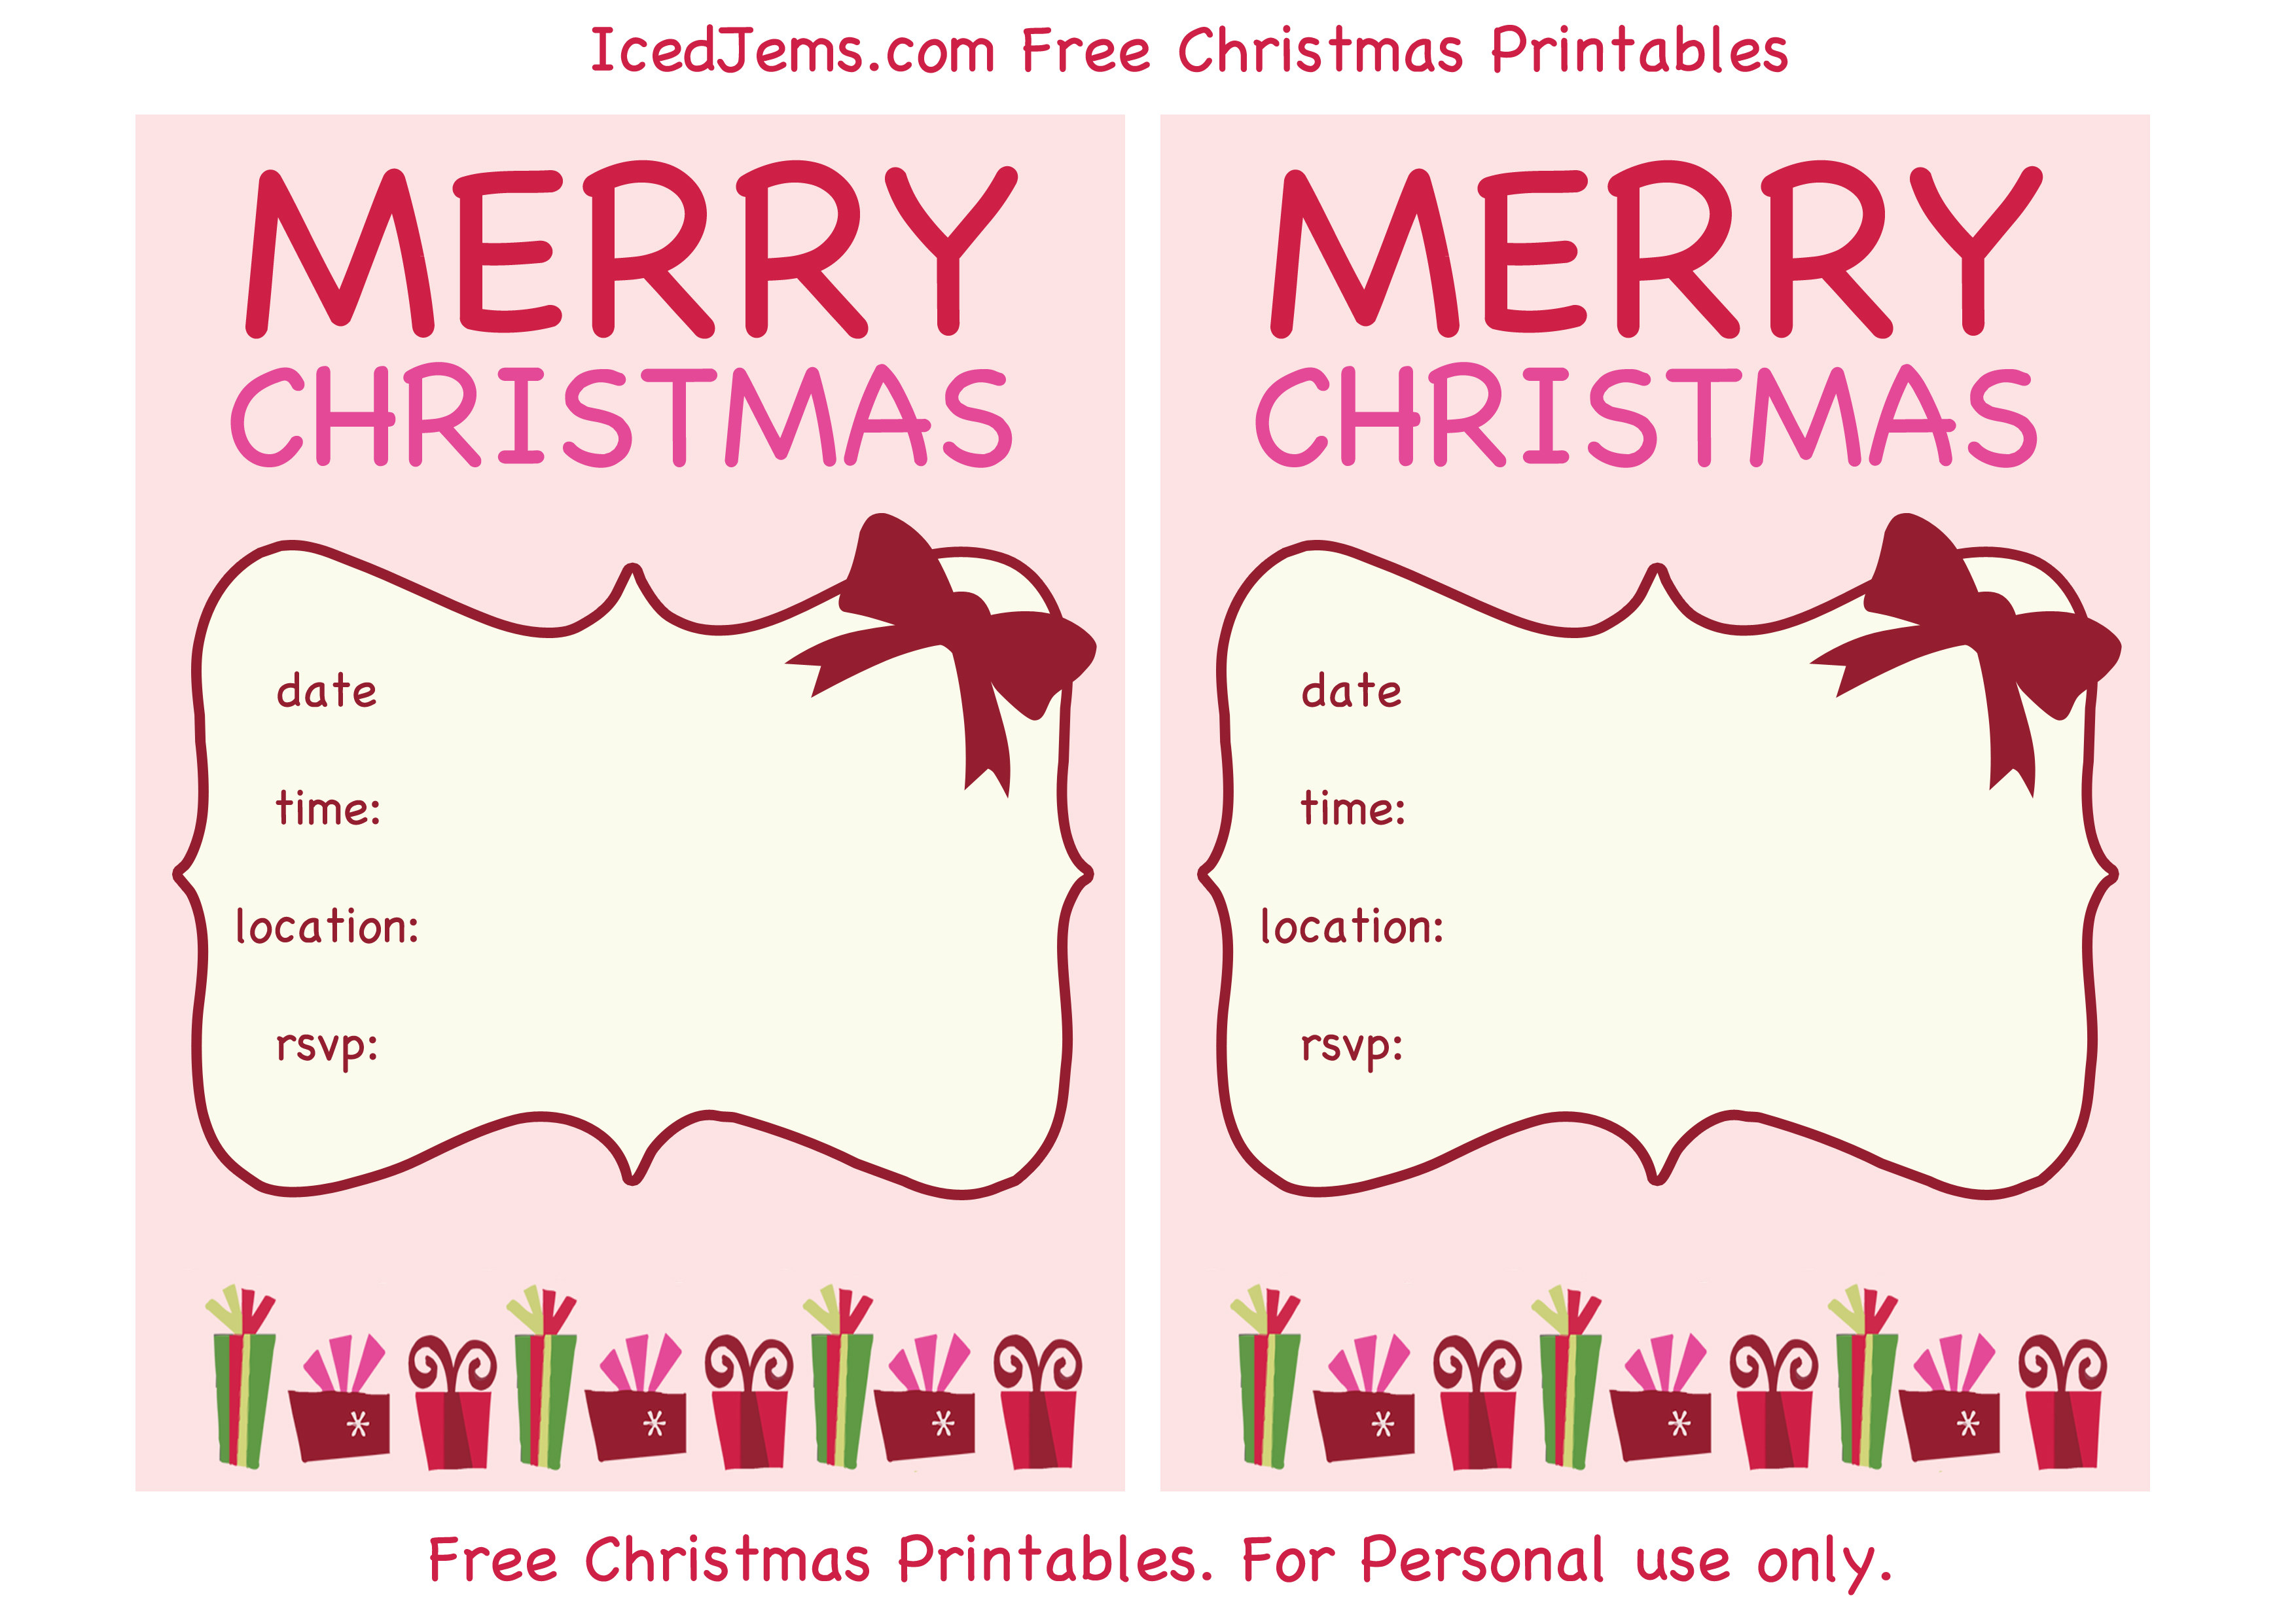 Free Printable Christmas Invitations Templates